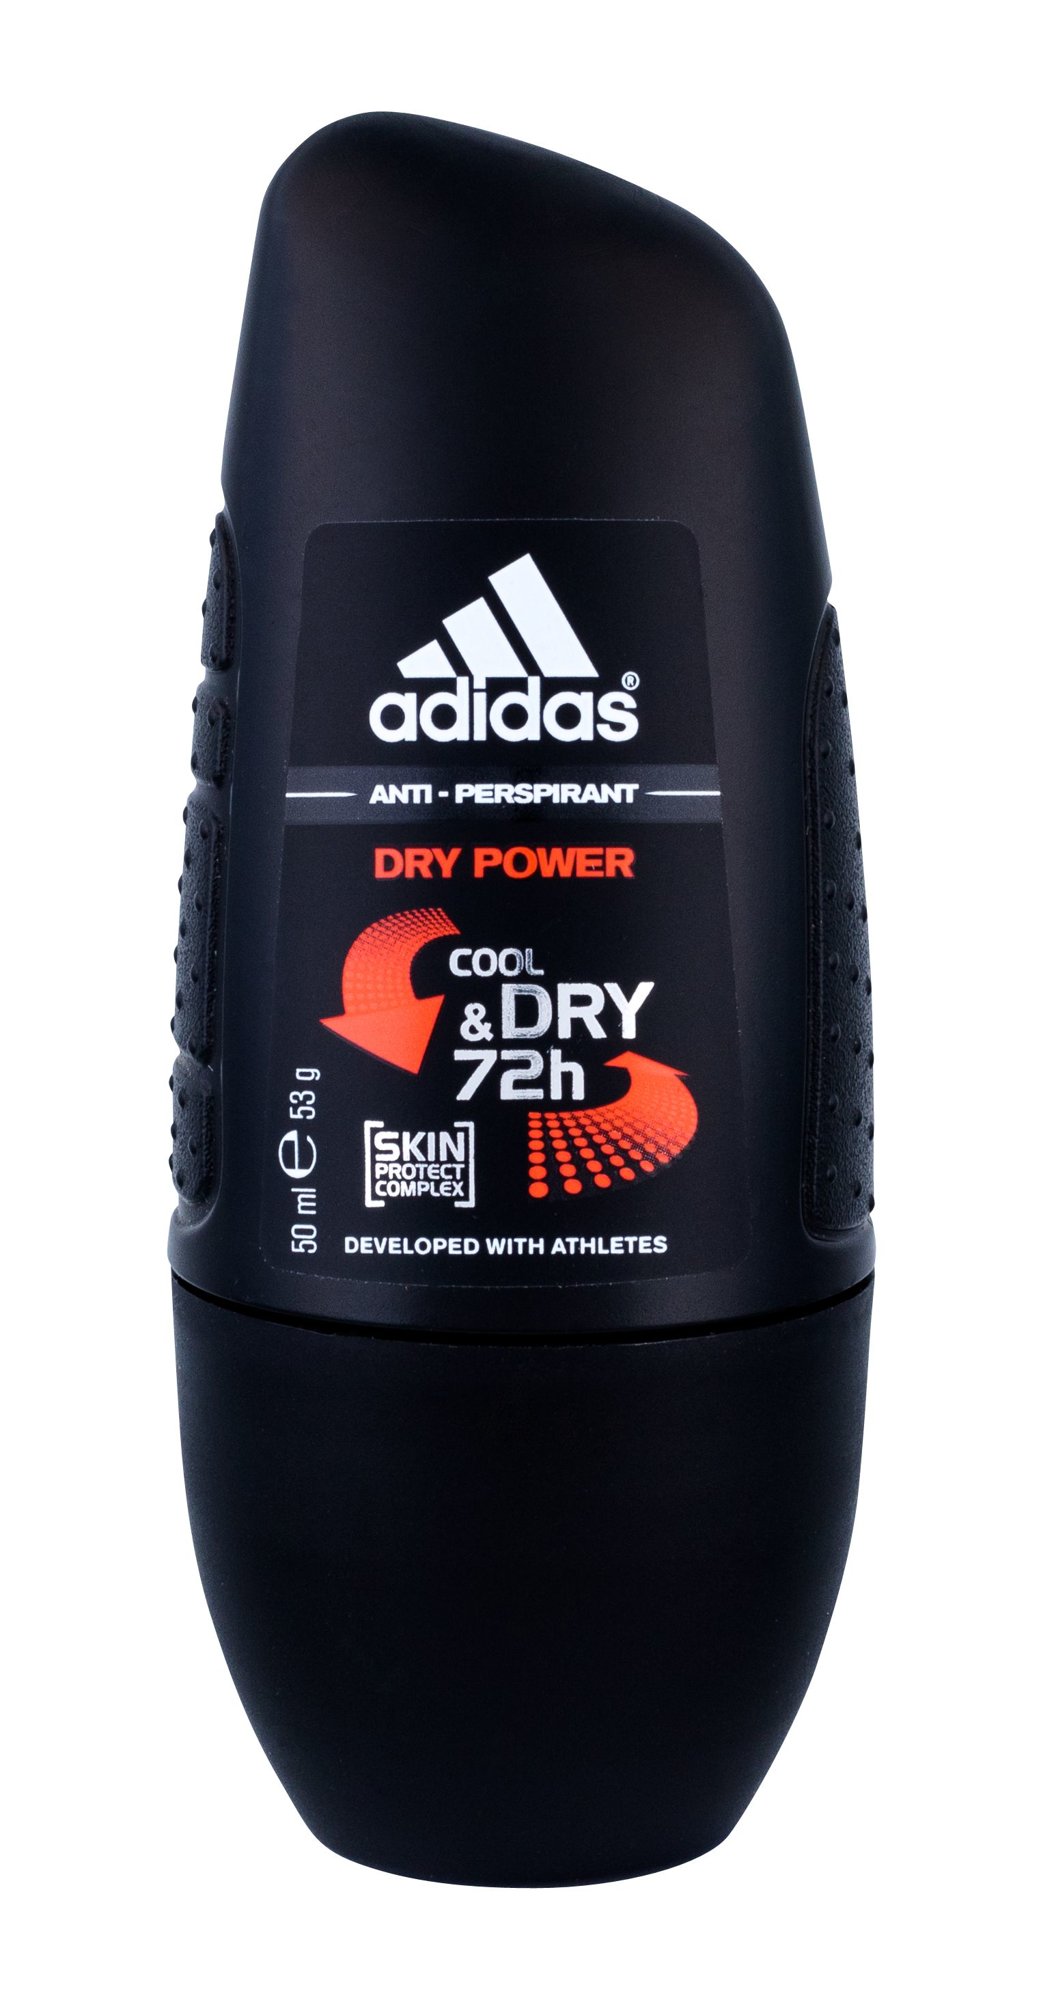 Adidas Dry Power Cool & Dry 72h